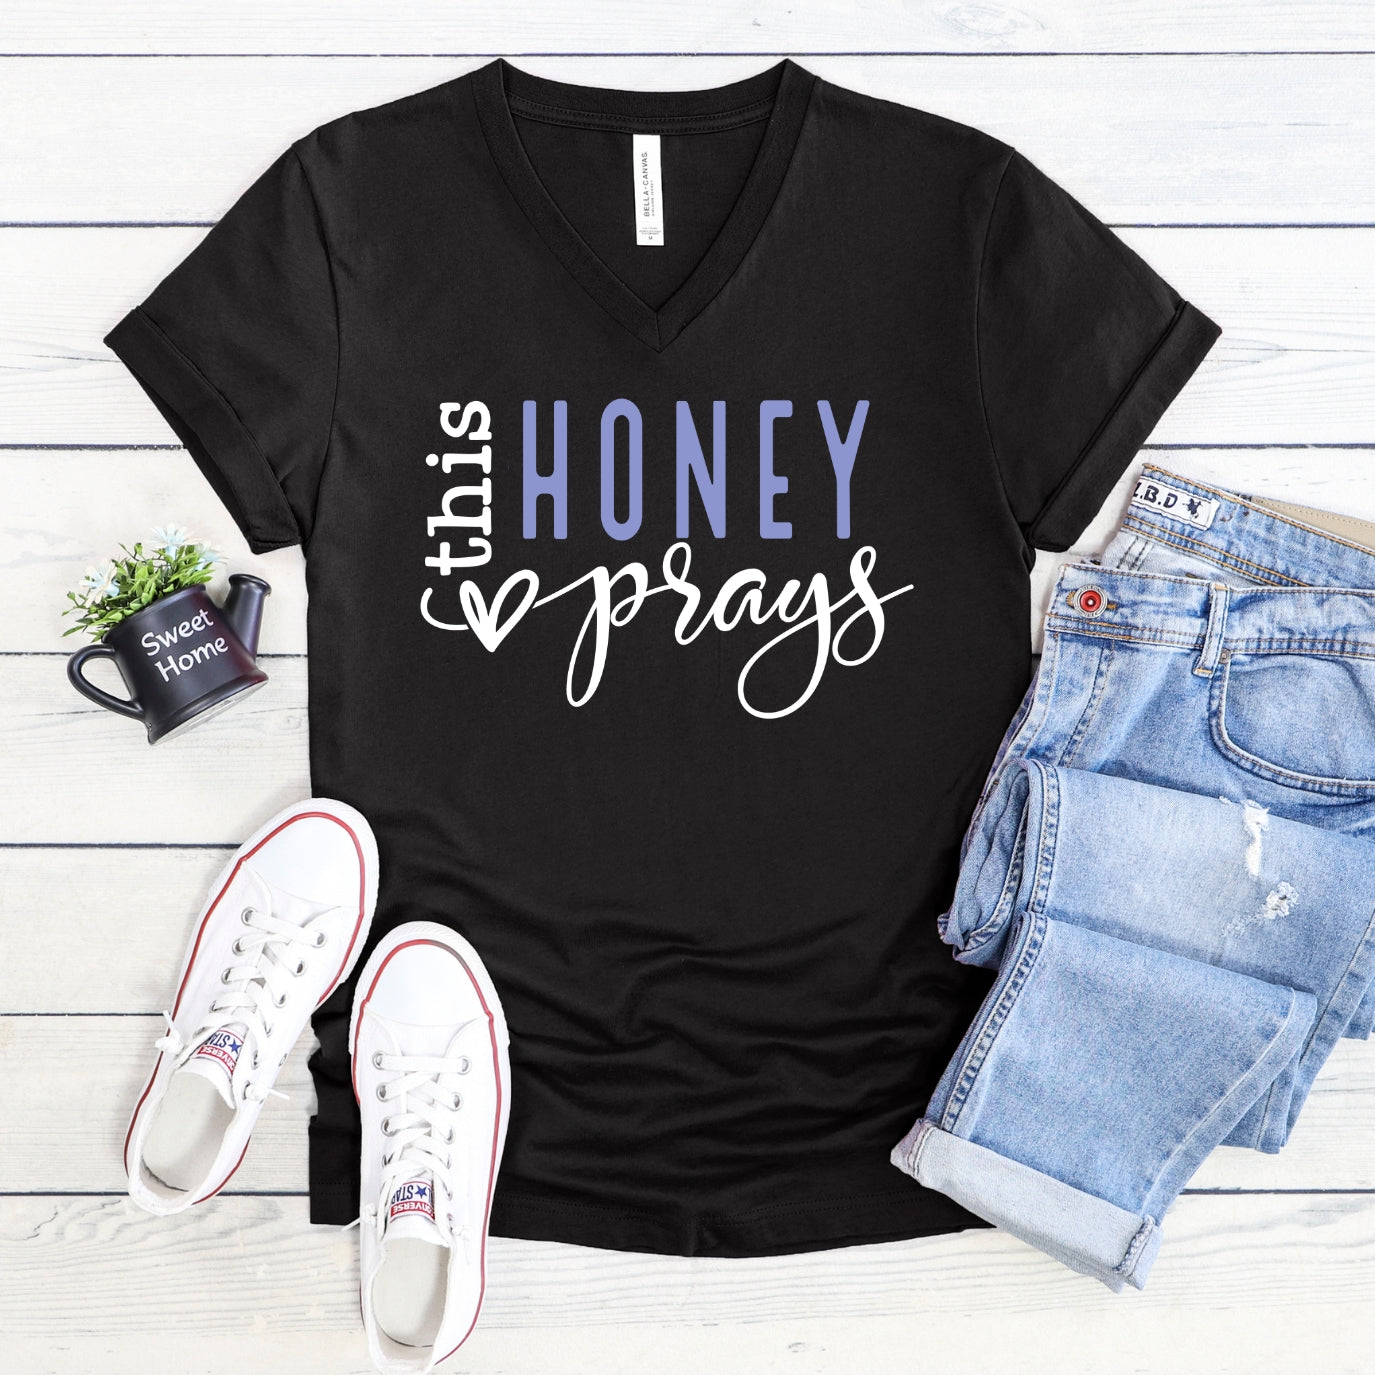 This Honey Prays Women's V-Neck Shirt